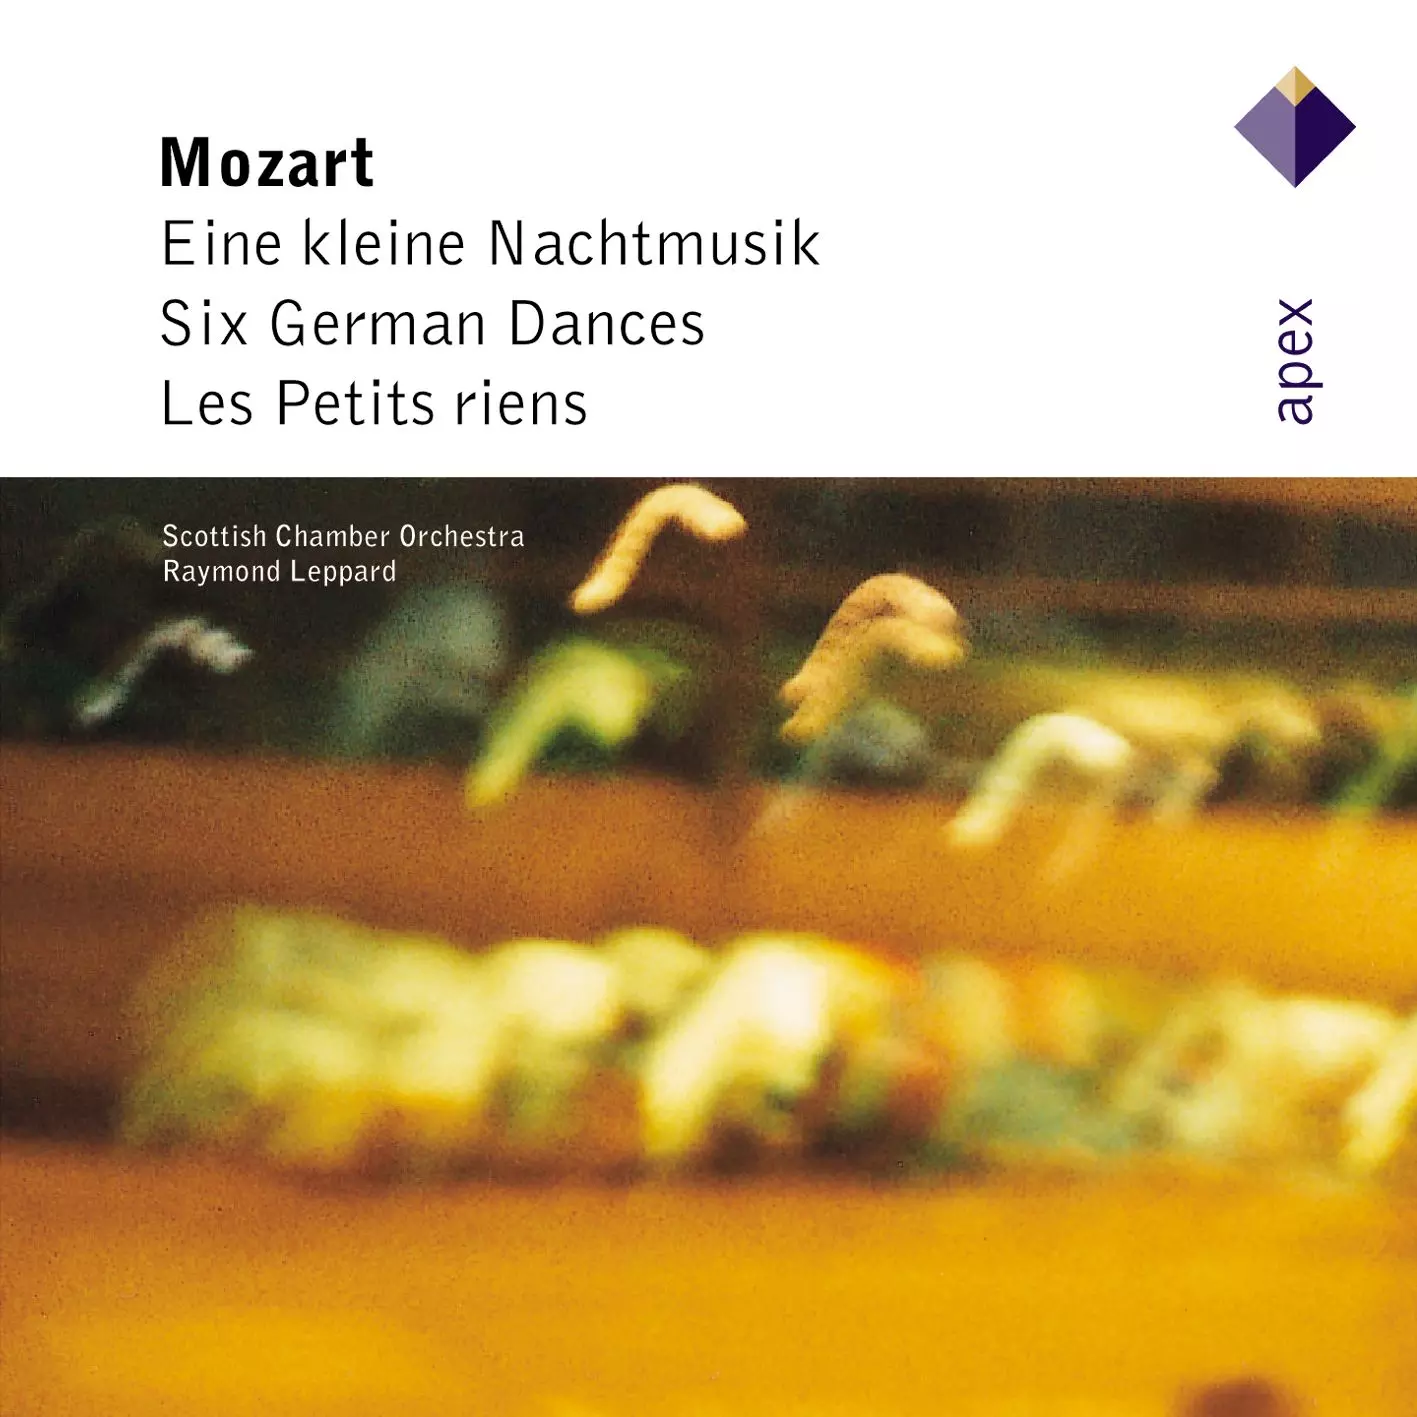 Mozart: Eine Kleine Nachtmusik, 6 Danses Allemandes, Les Petits Riens